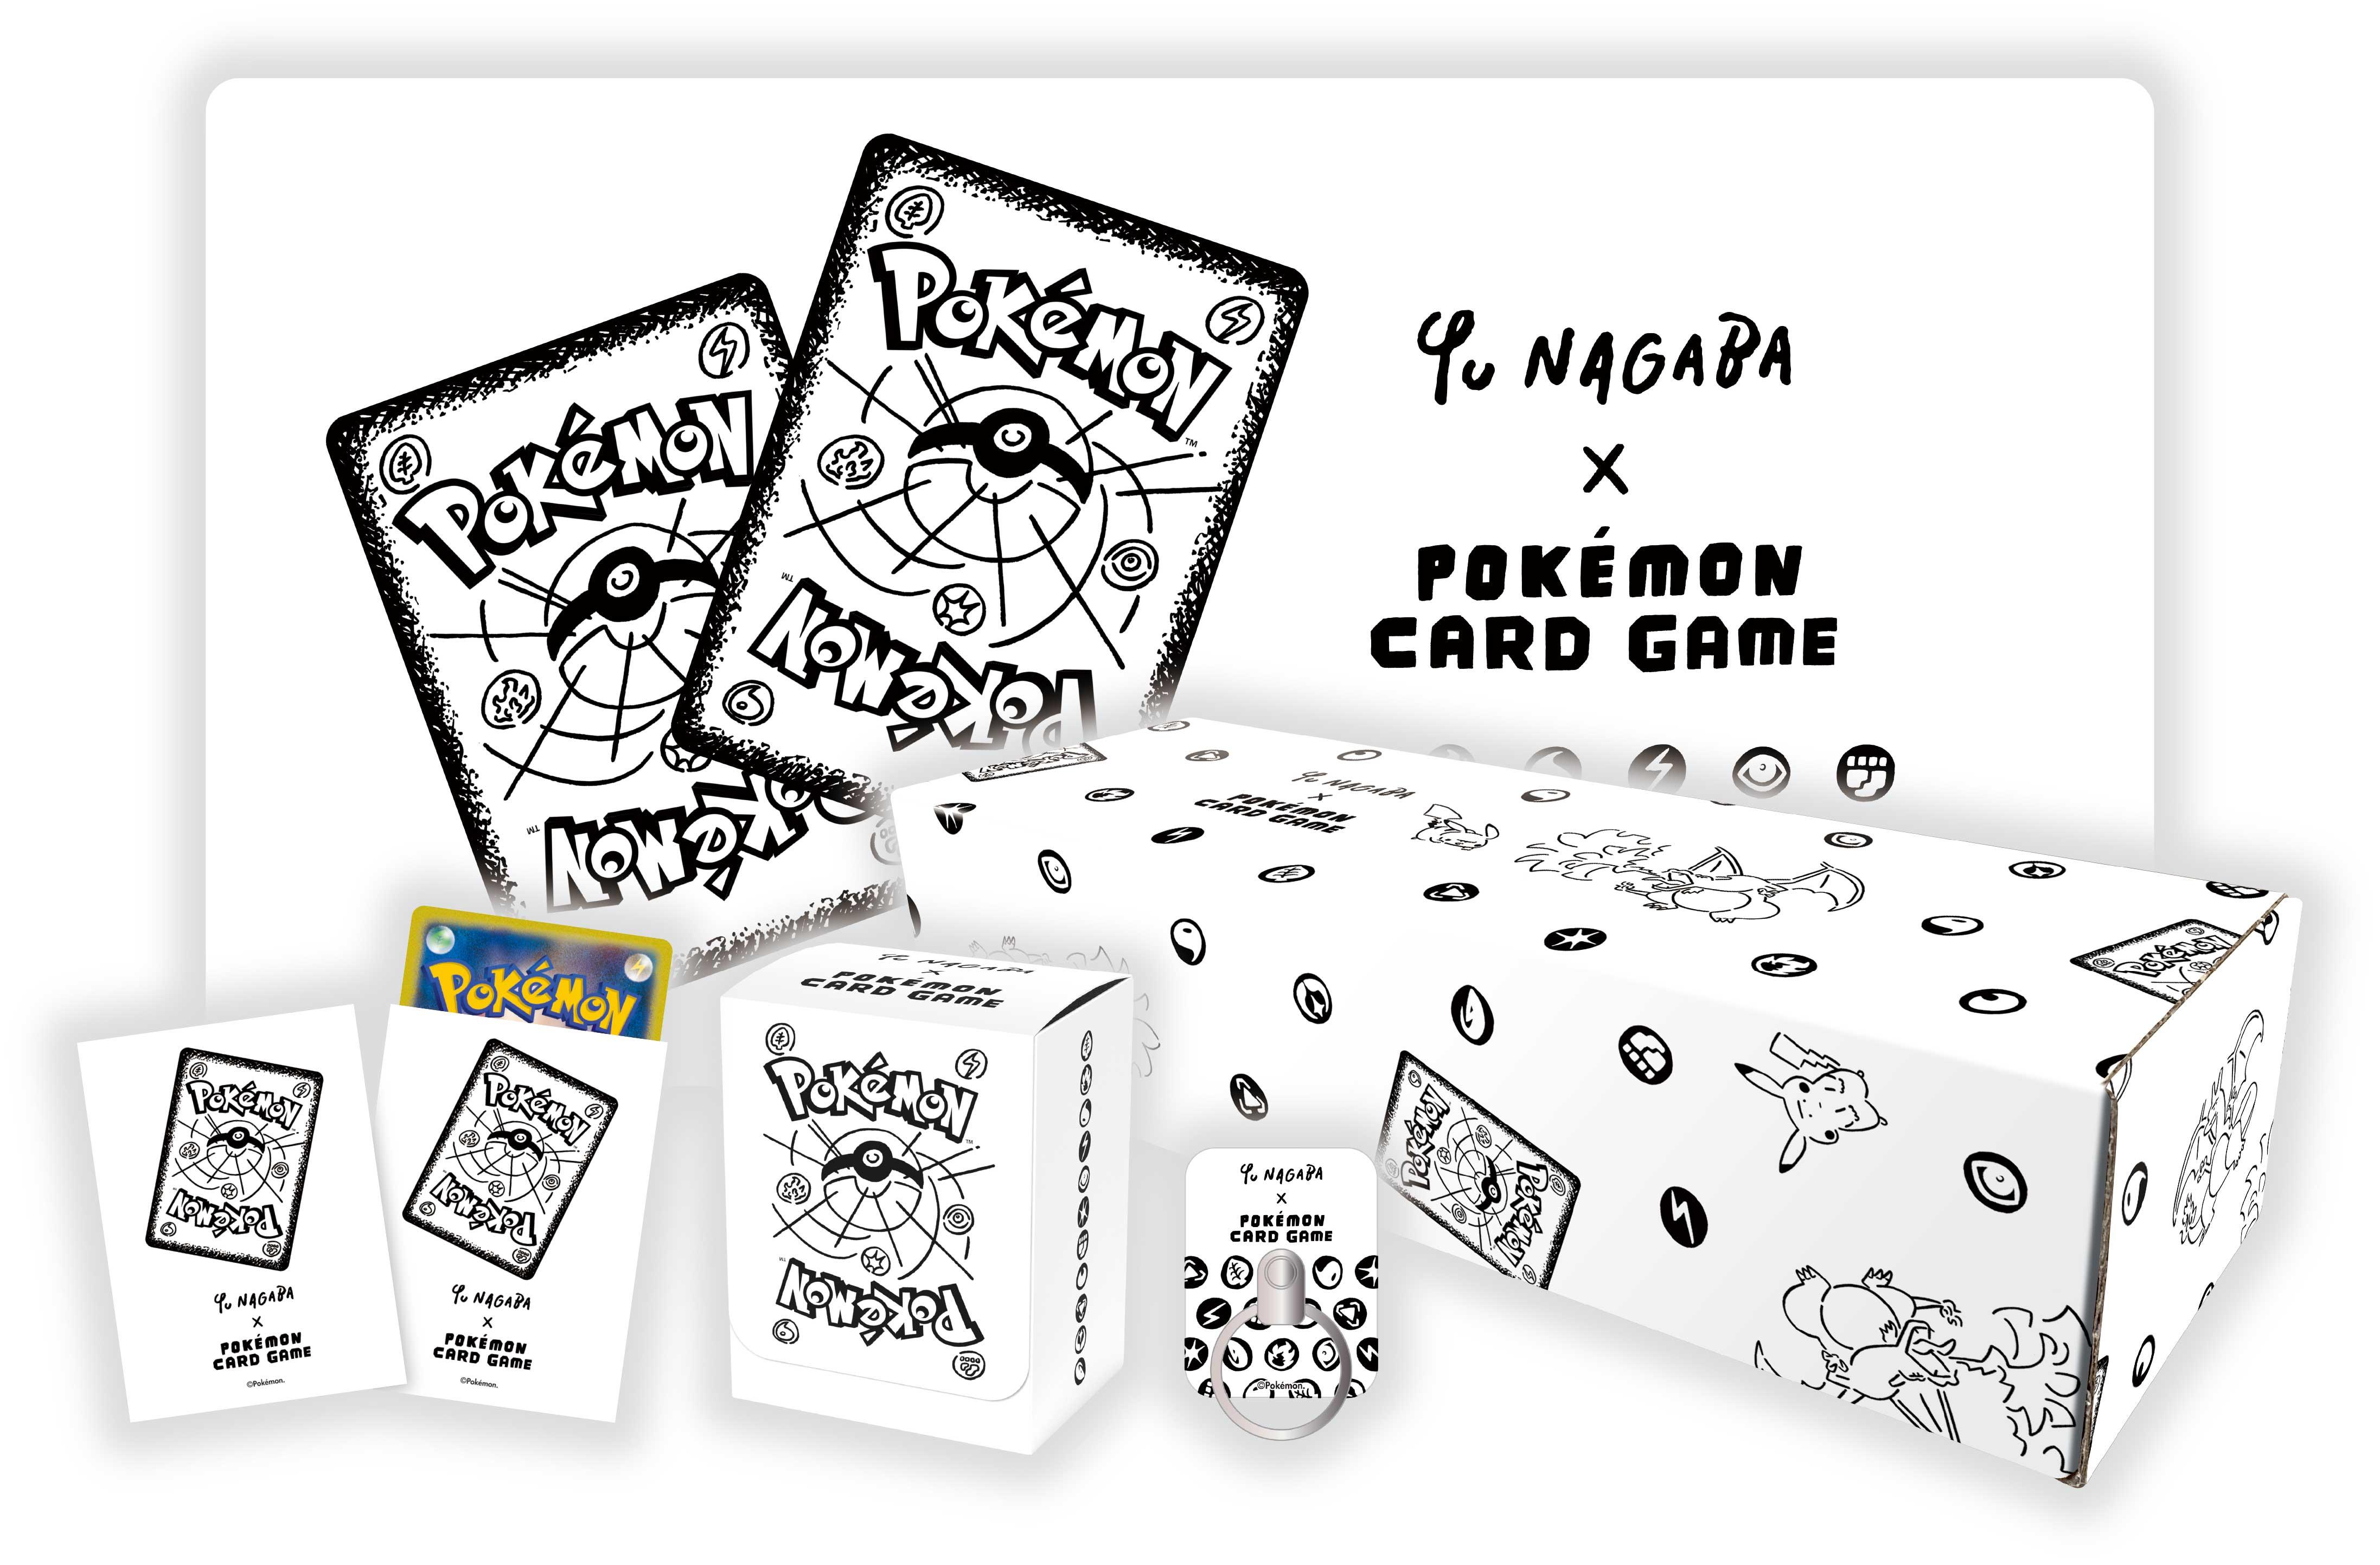 Yu Nagaba ポケモンカードゲーム コラボレーションが実現 ポケモンカードゲーム公式ホームページ